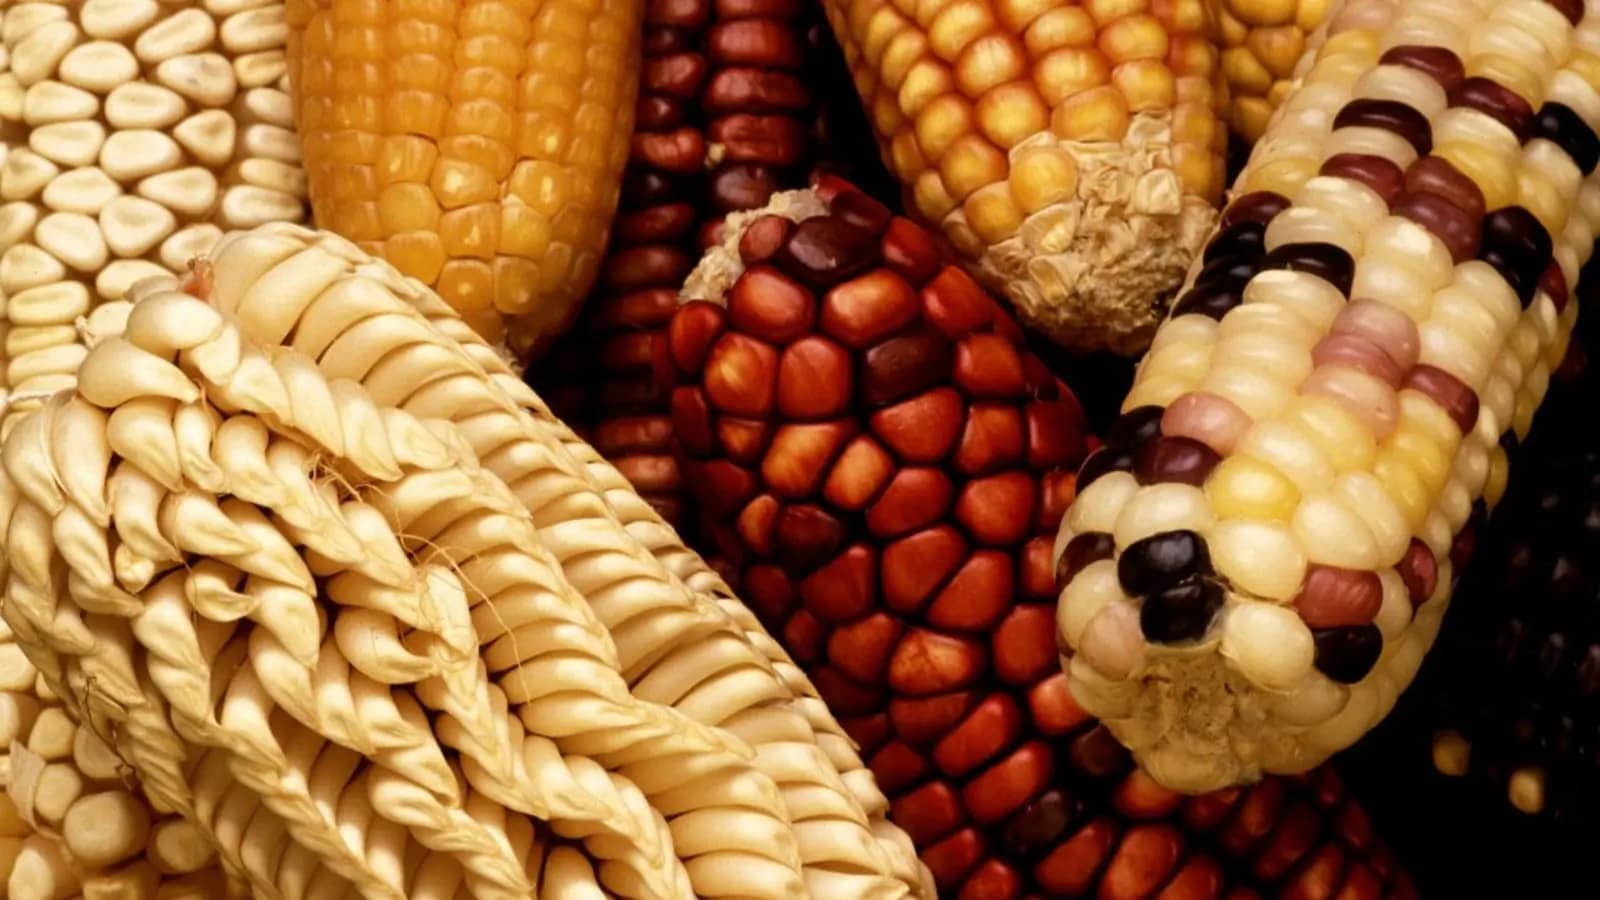 Origin Agritech receives a 20,000 Metric Ton order for nutritionally enhanced corn from Yunnan Feeding Company